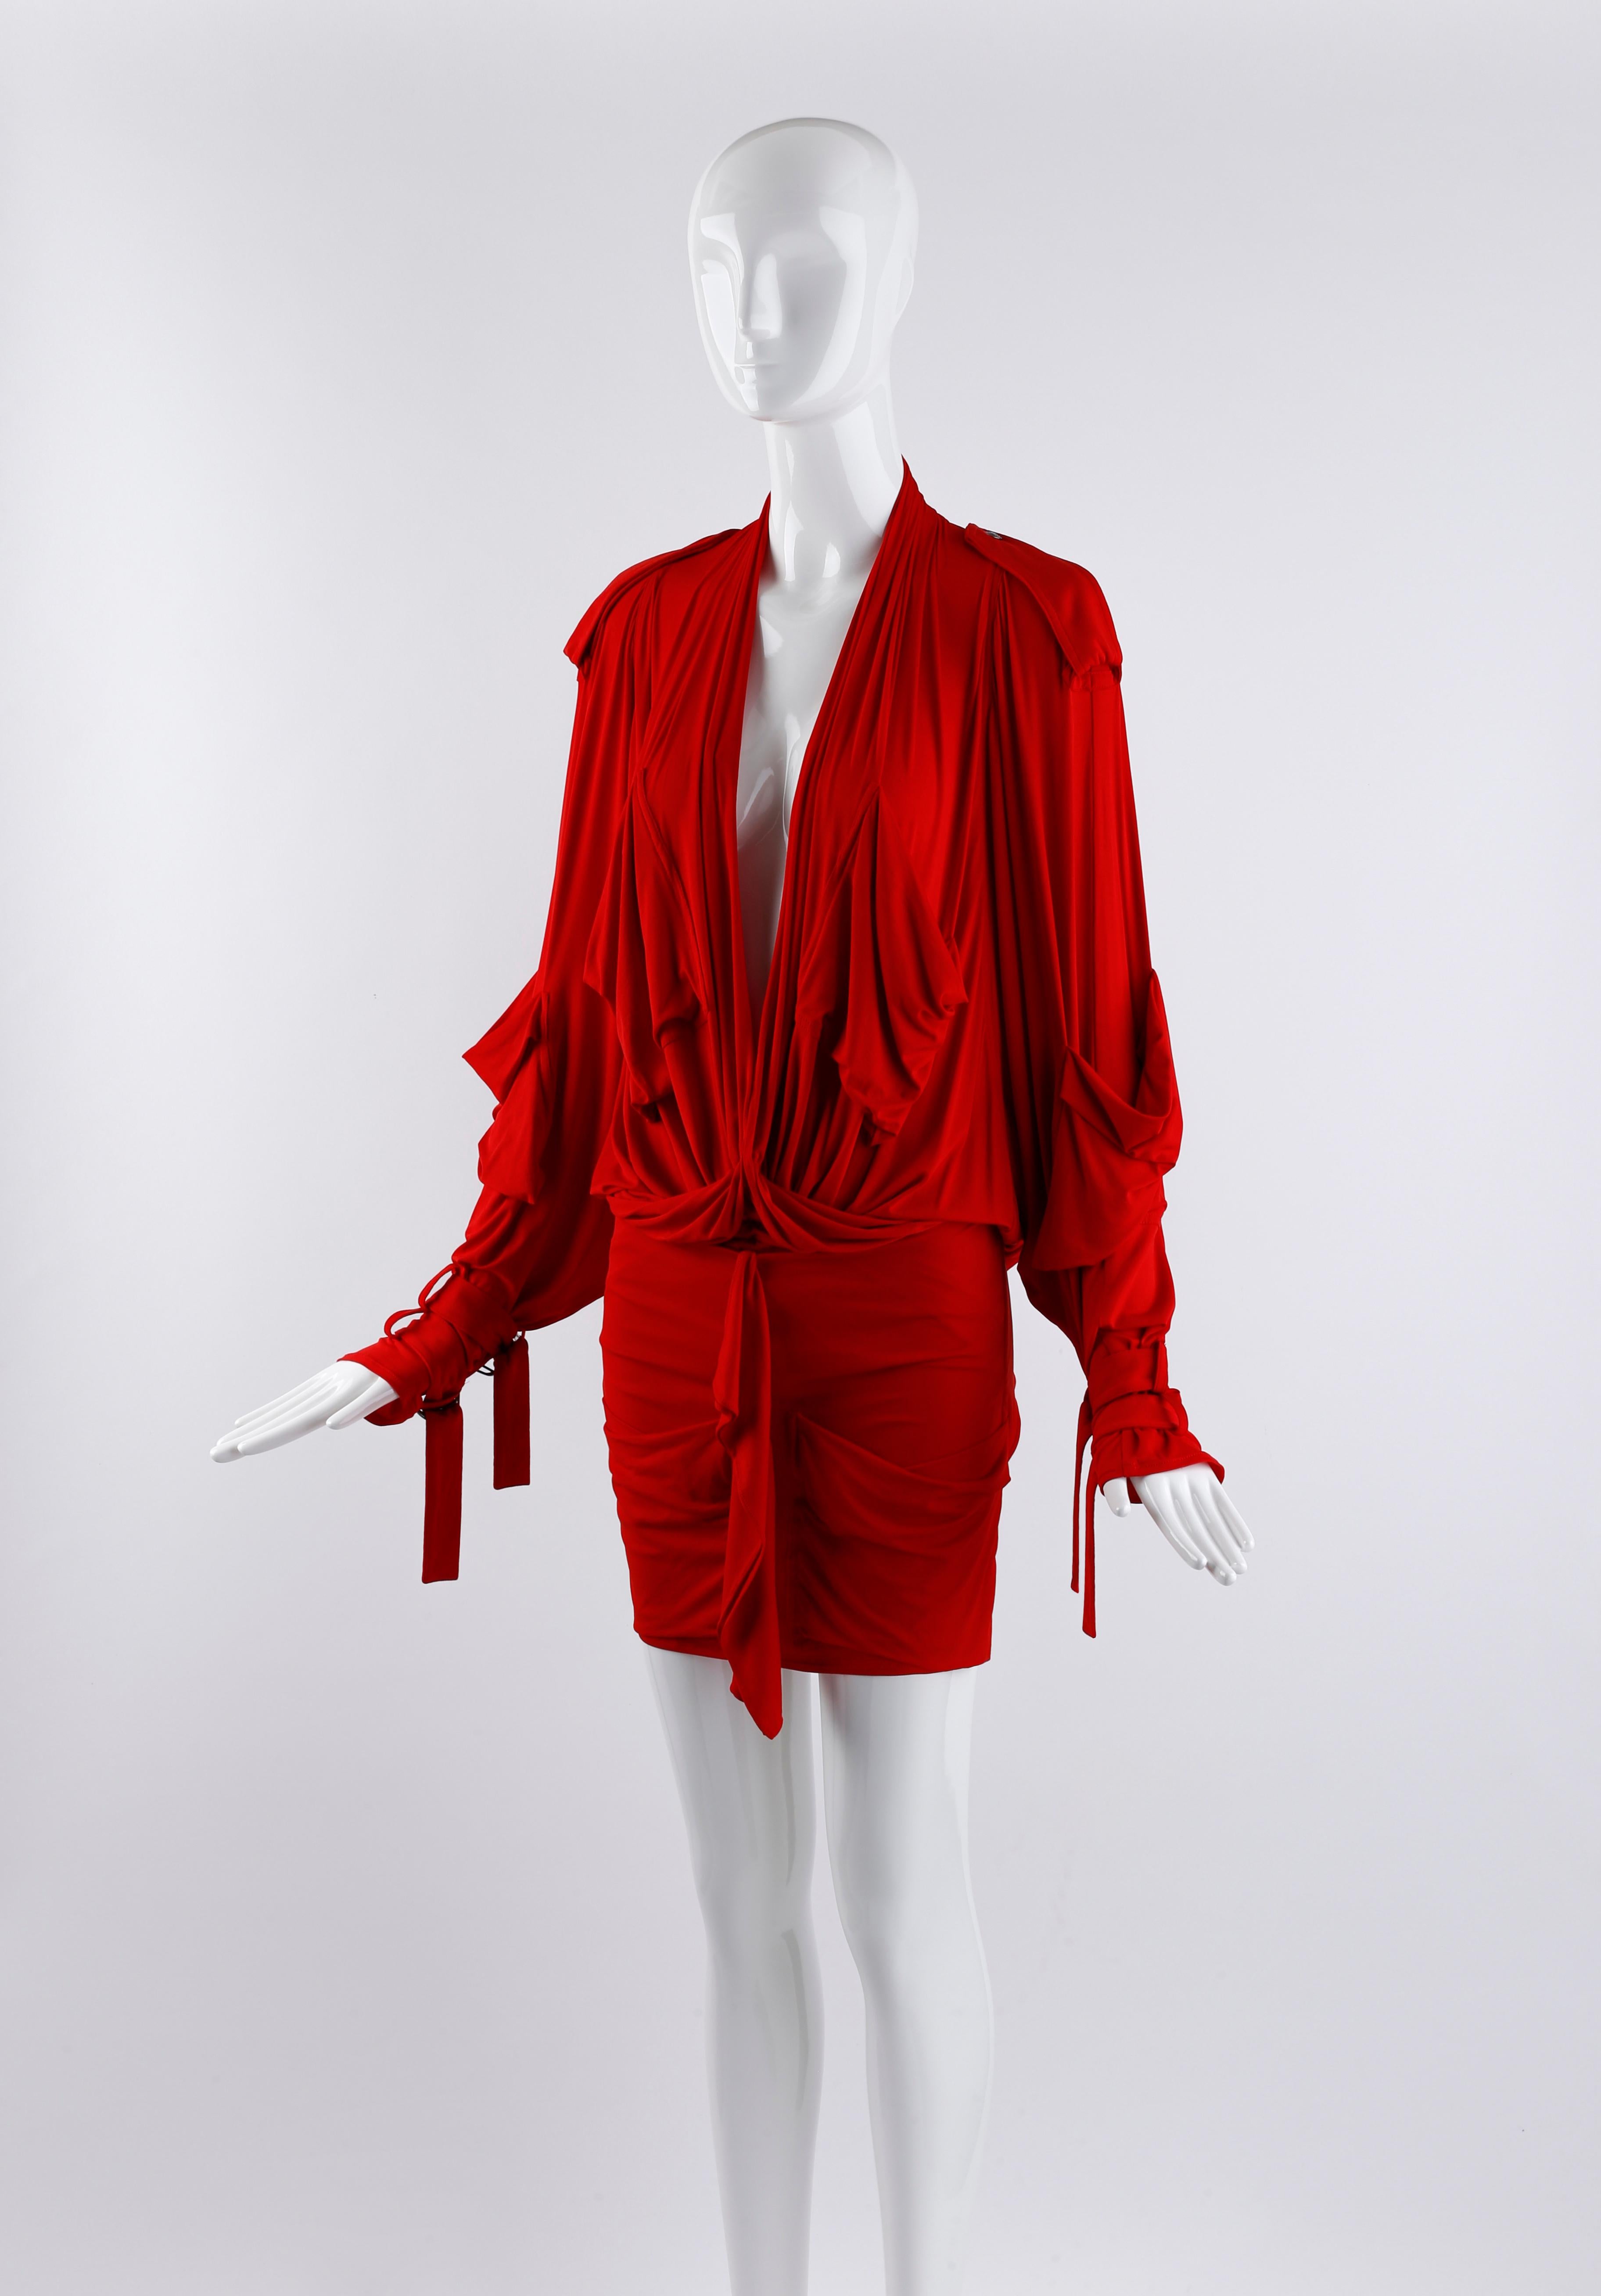 Christian Dior John Galliano S/S 2003 Red Plunge Draped Pocket Mini Dress For Sale 5